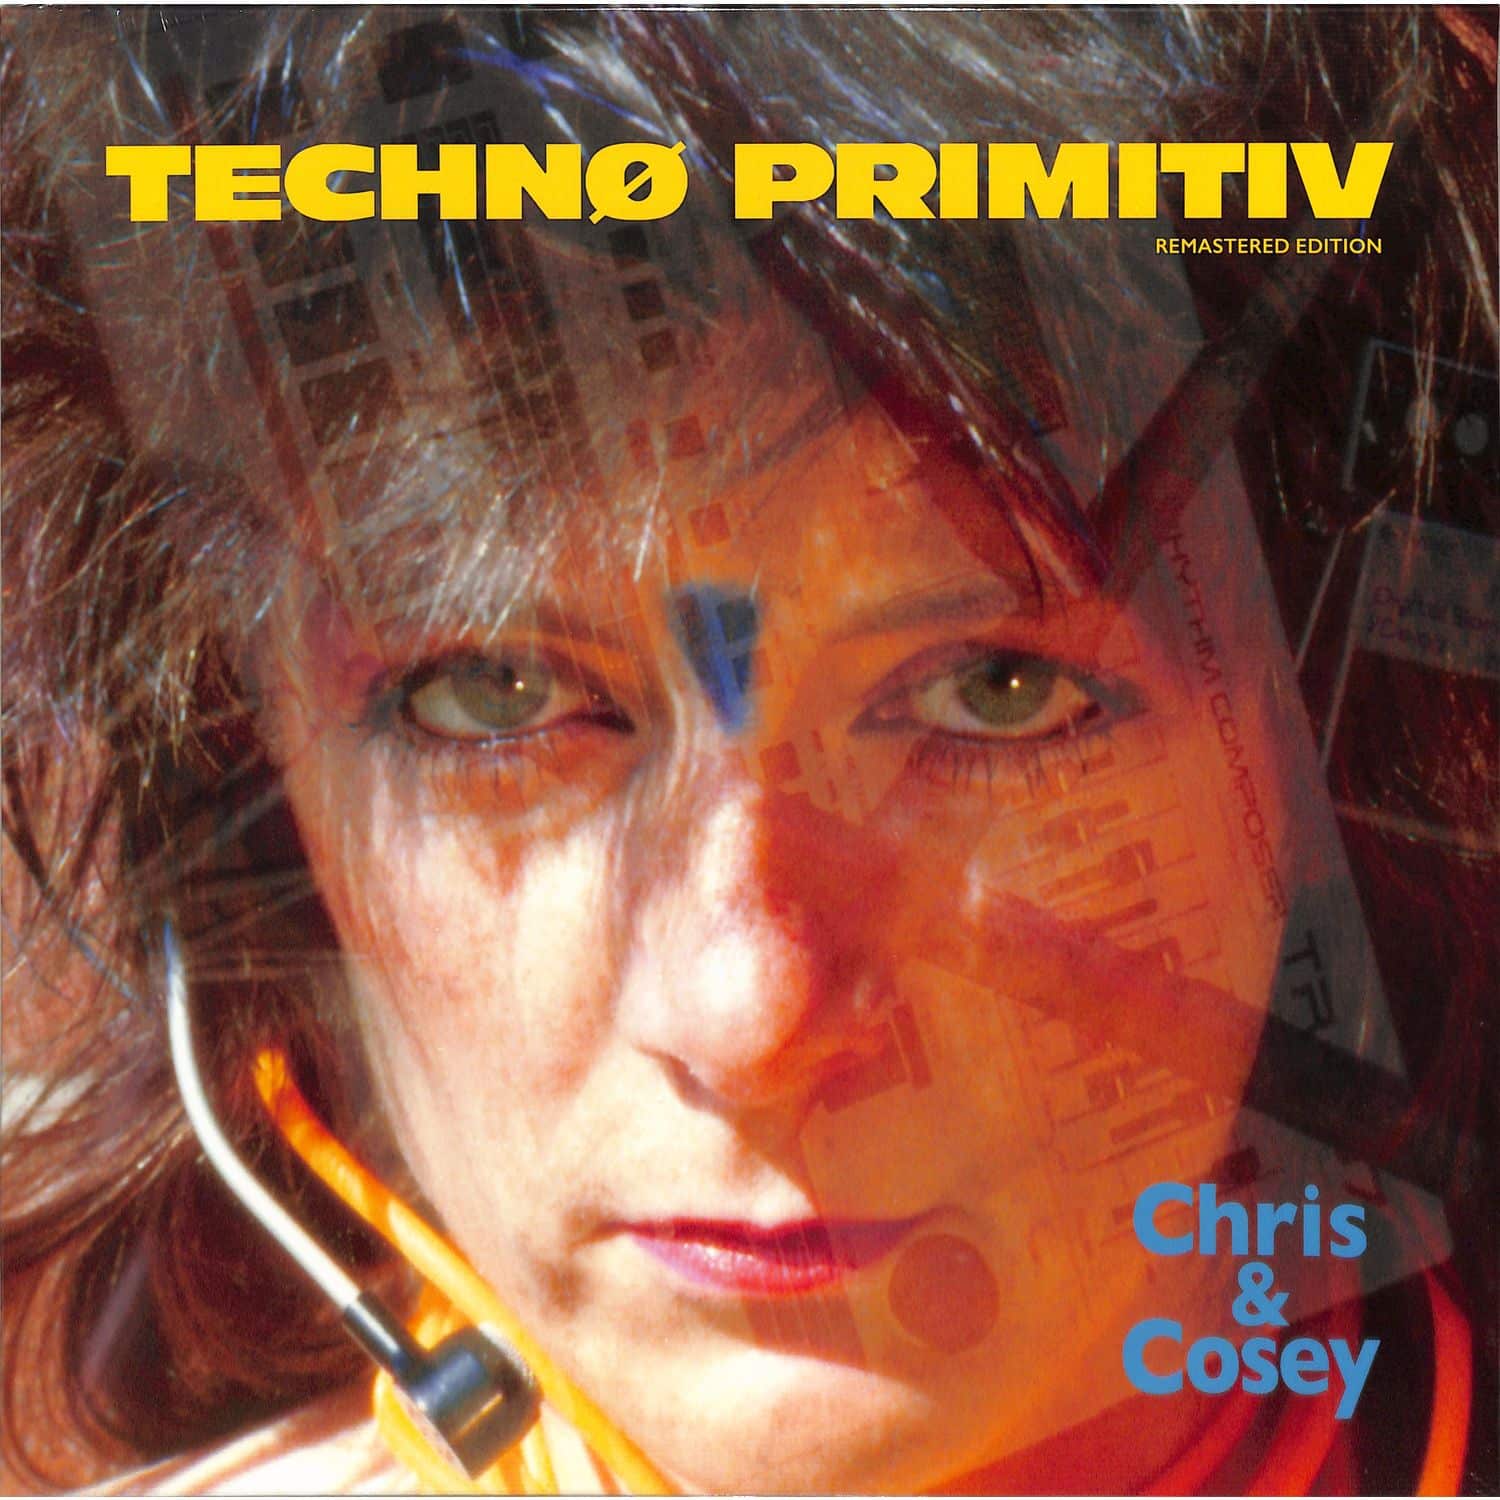 Chris & Cosey - TECHNO PRIMITIVE 